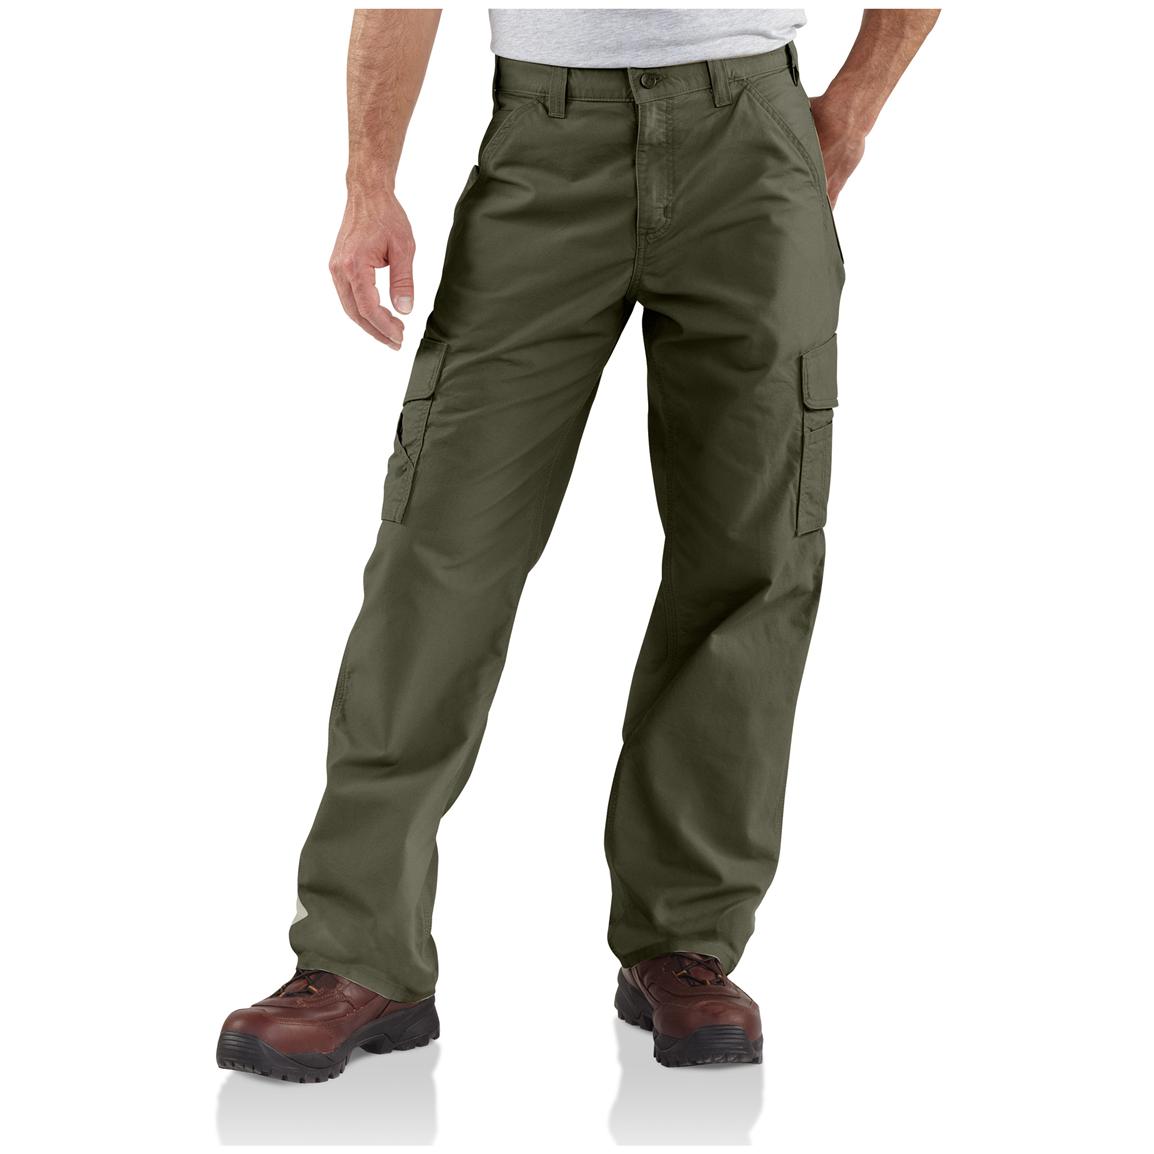 Men's Carhartt® Canvas Utility Pants - 226917, Jeans & Pants at ...